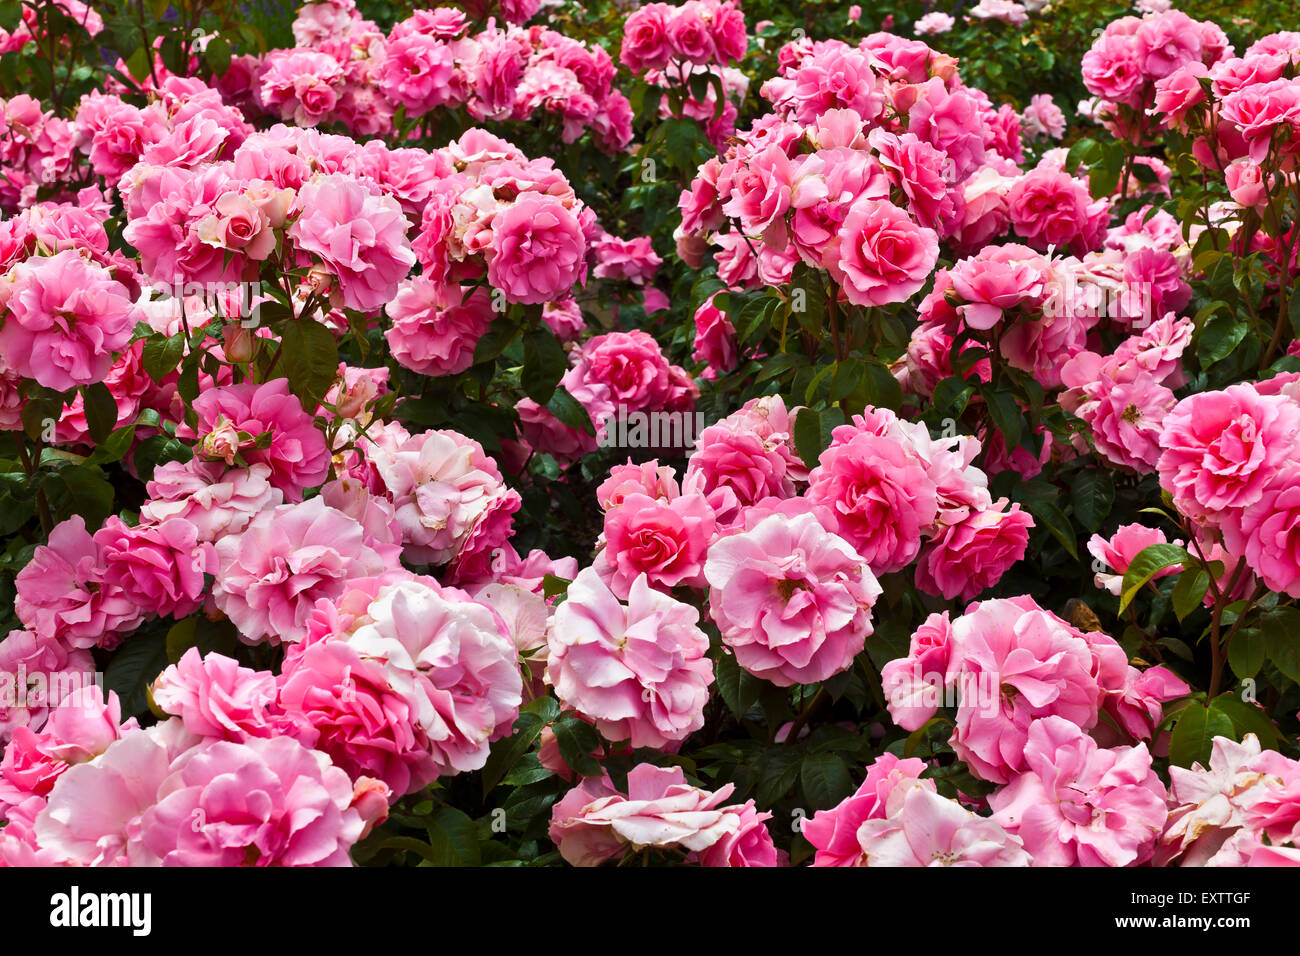 Rosa Floribunda Rosen in ein Blumenbeet hautnah. Stockfoto